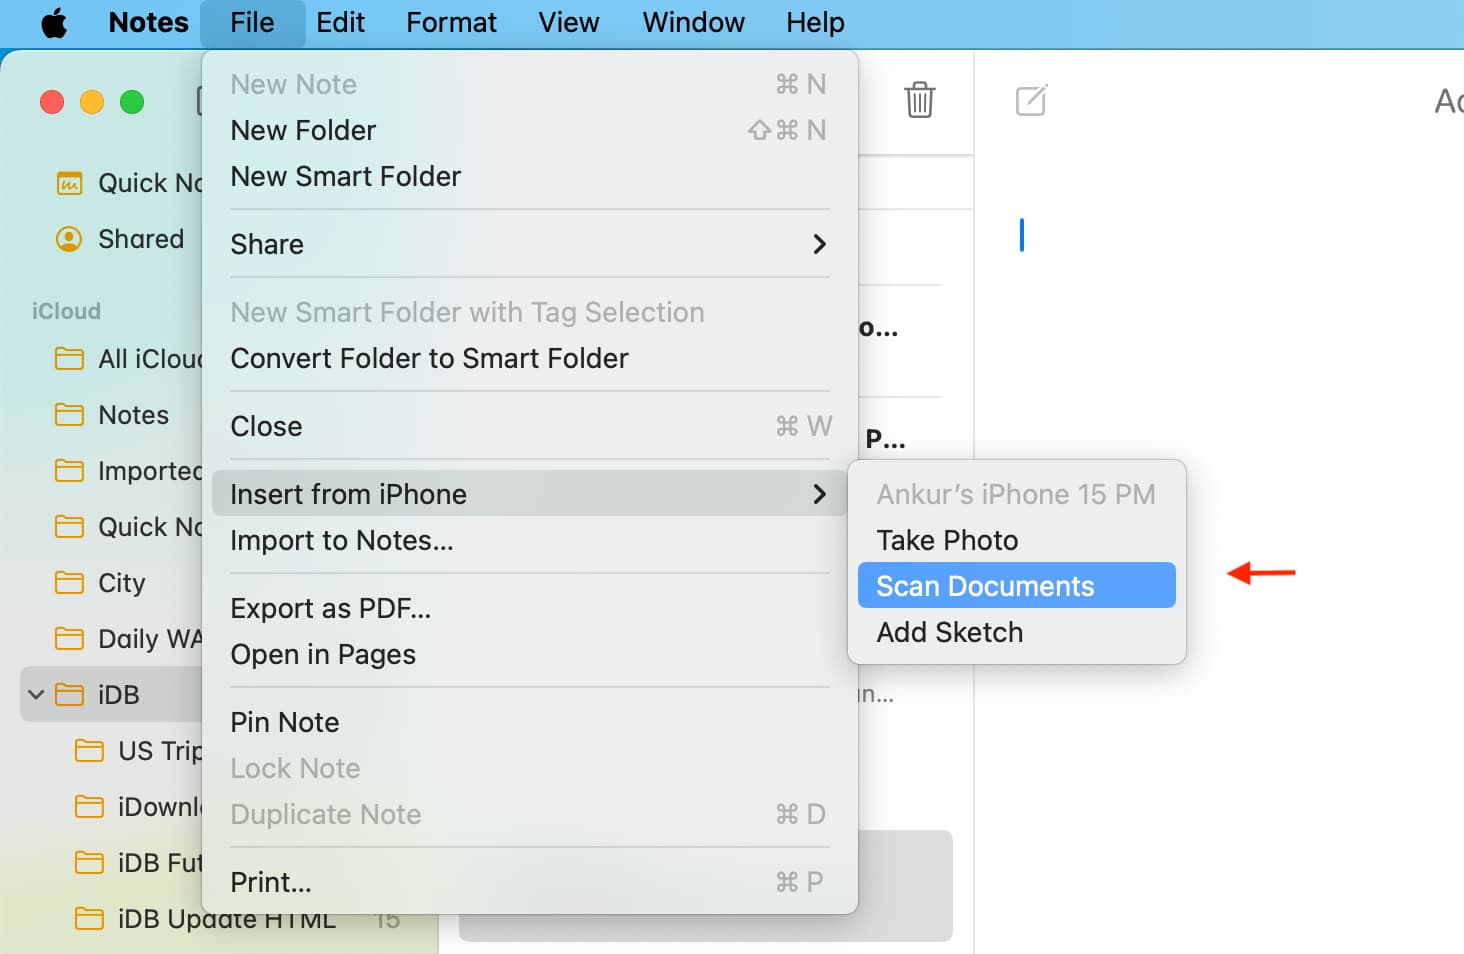 Insert from iPhone option in menu bar of Mac app